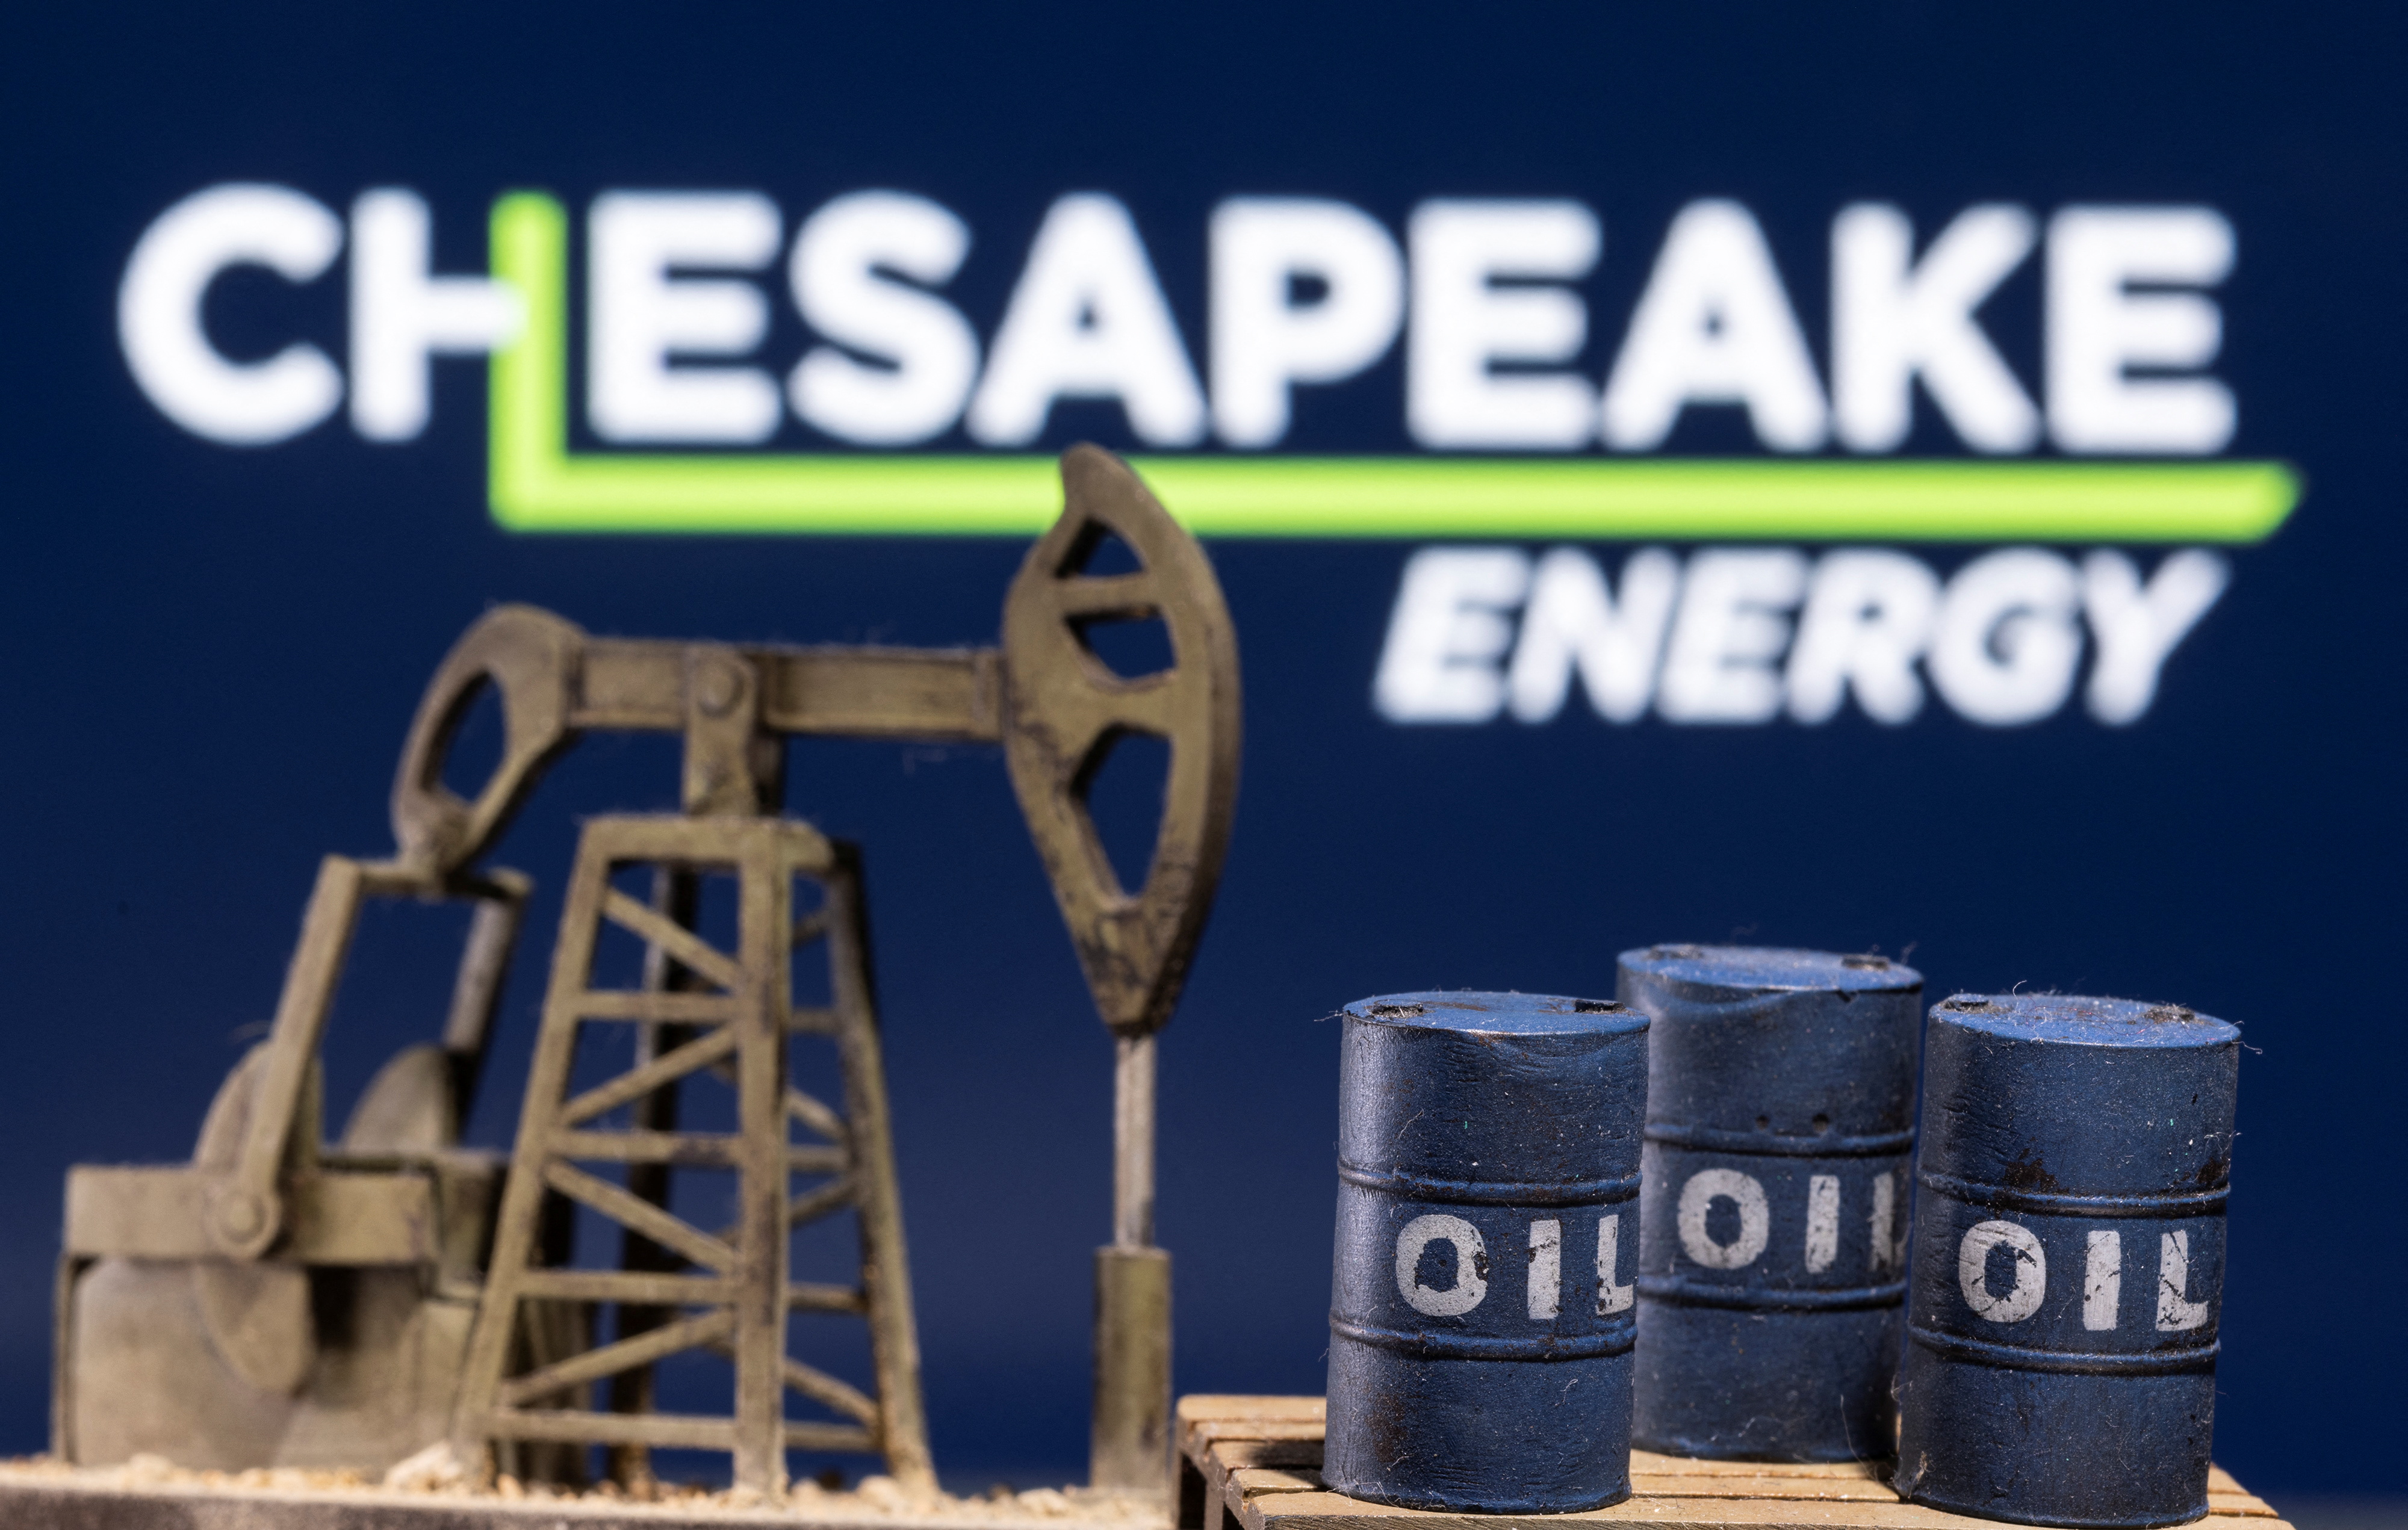 Illustration shows Chesapeake Energy logo